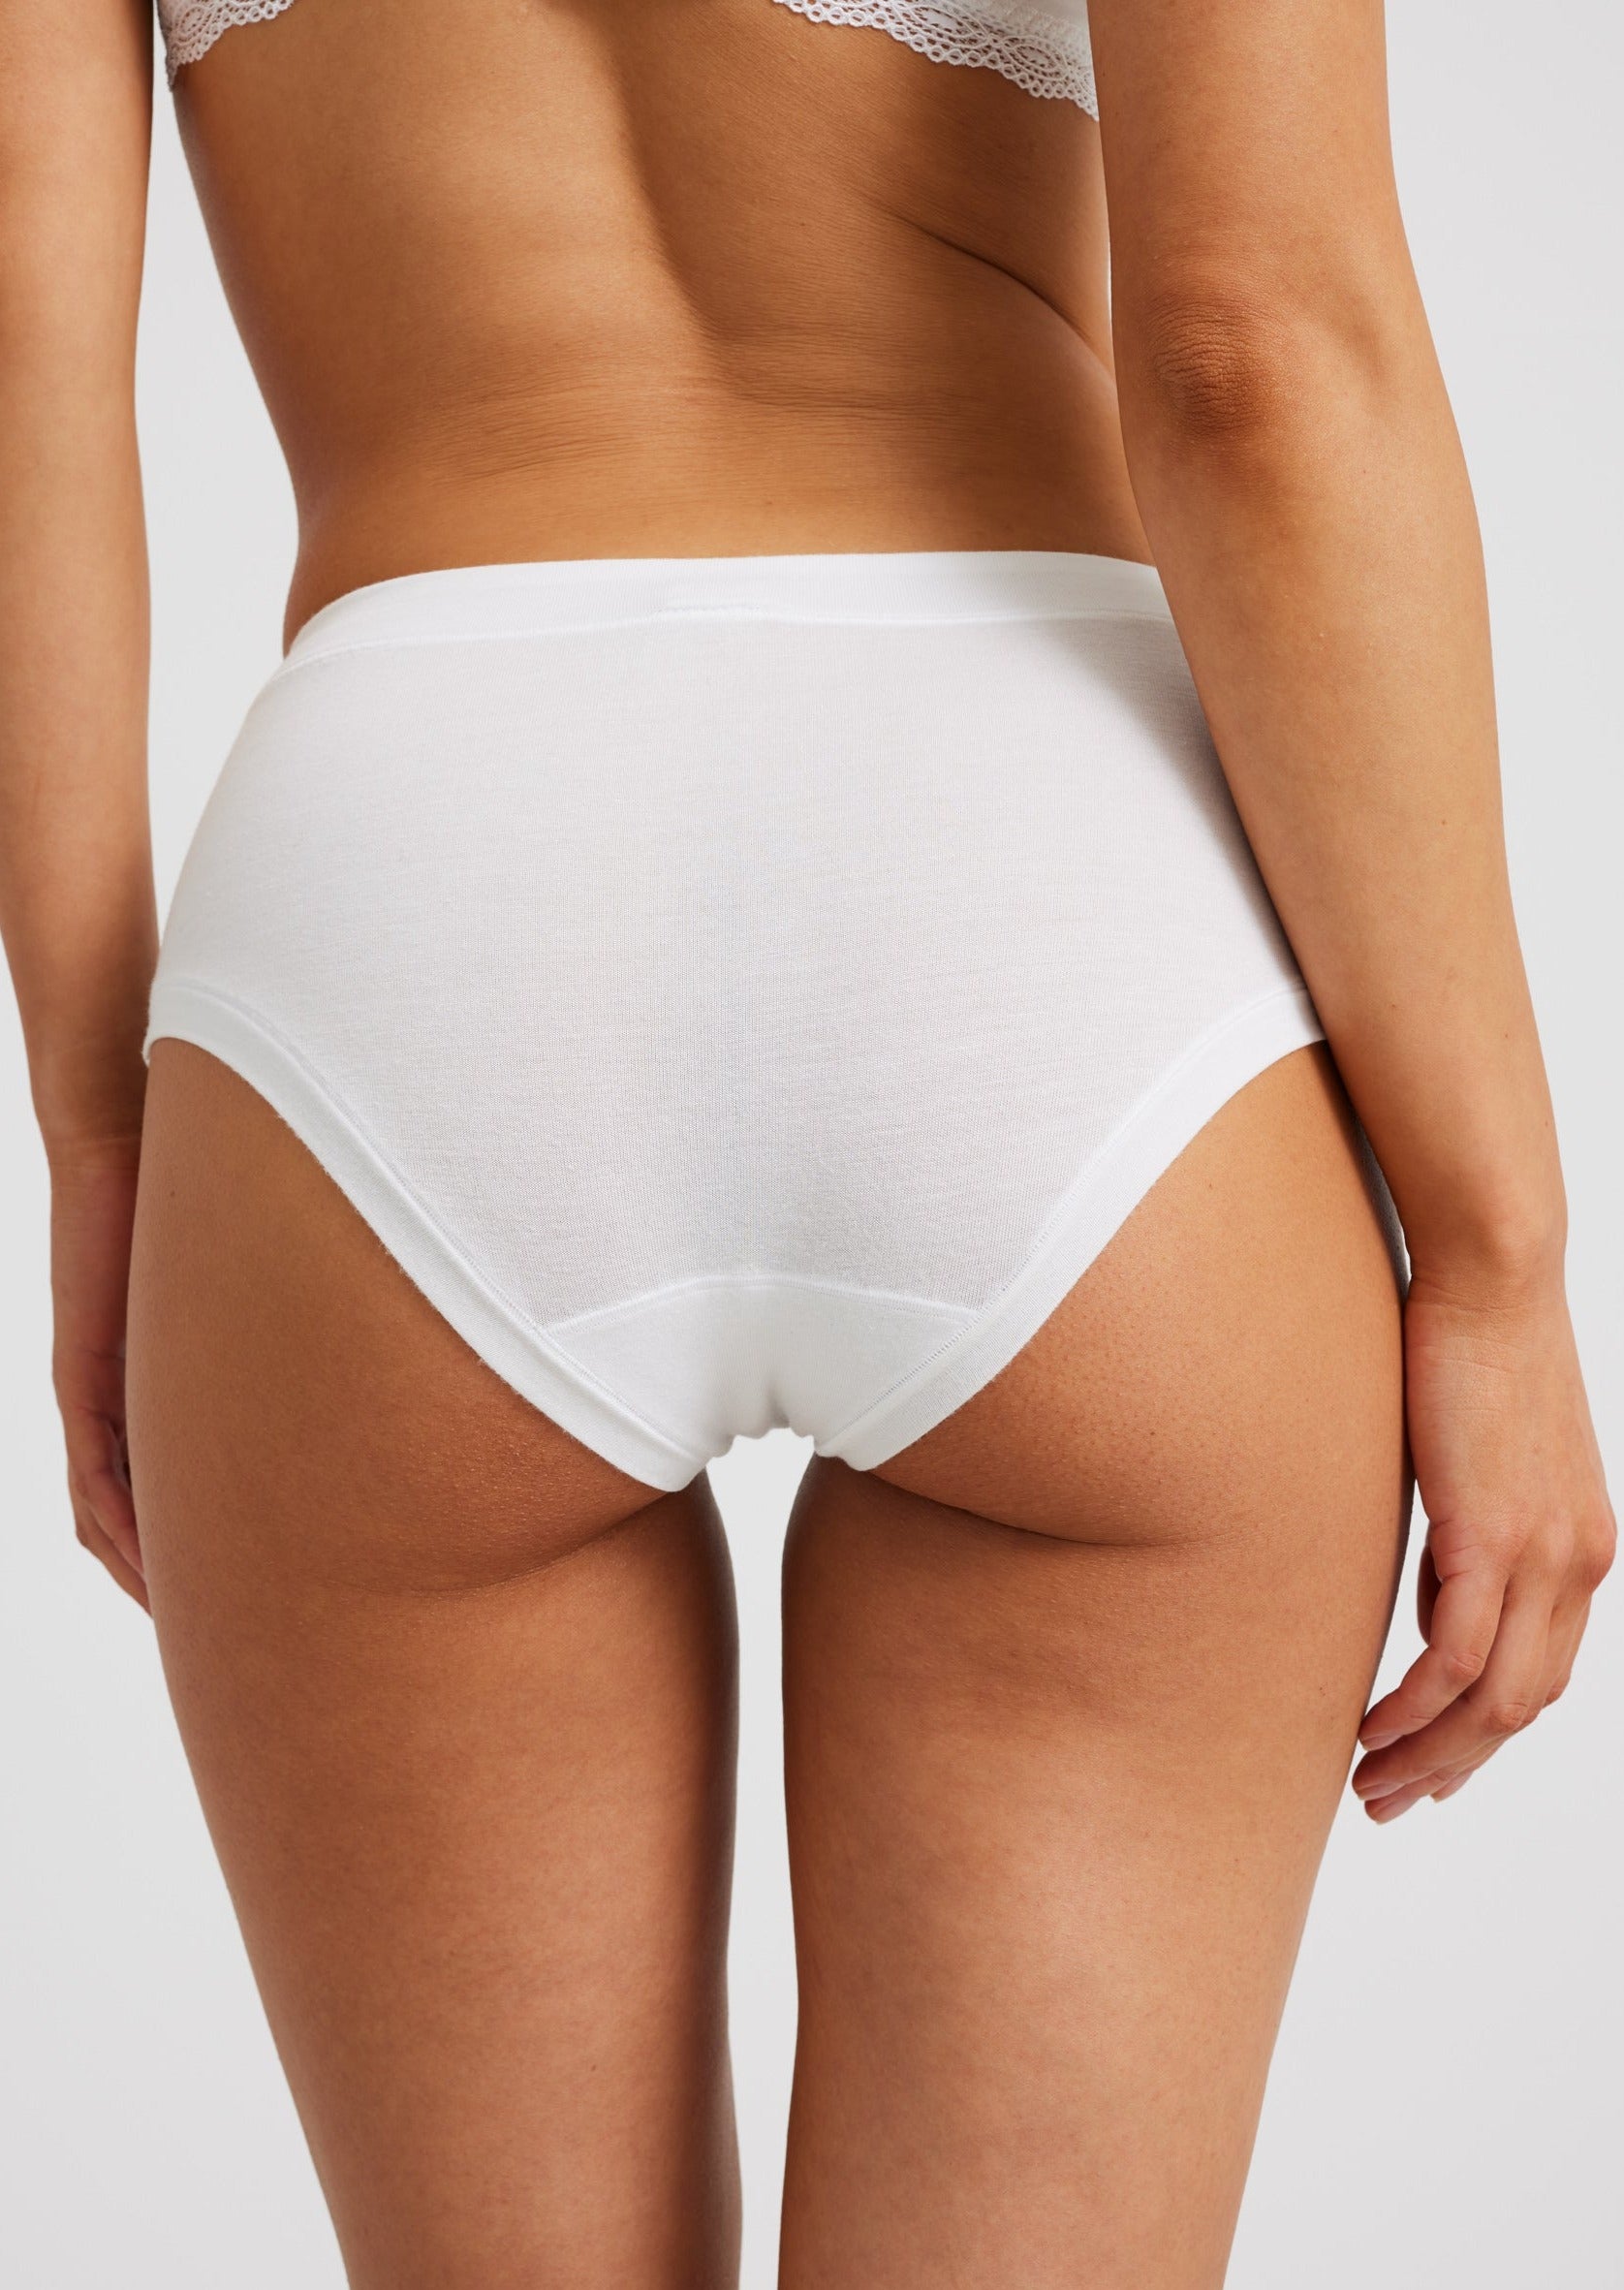 Bob Baker 1 Dozen Women's White Underwear Size 12